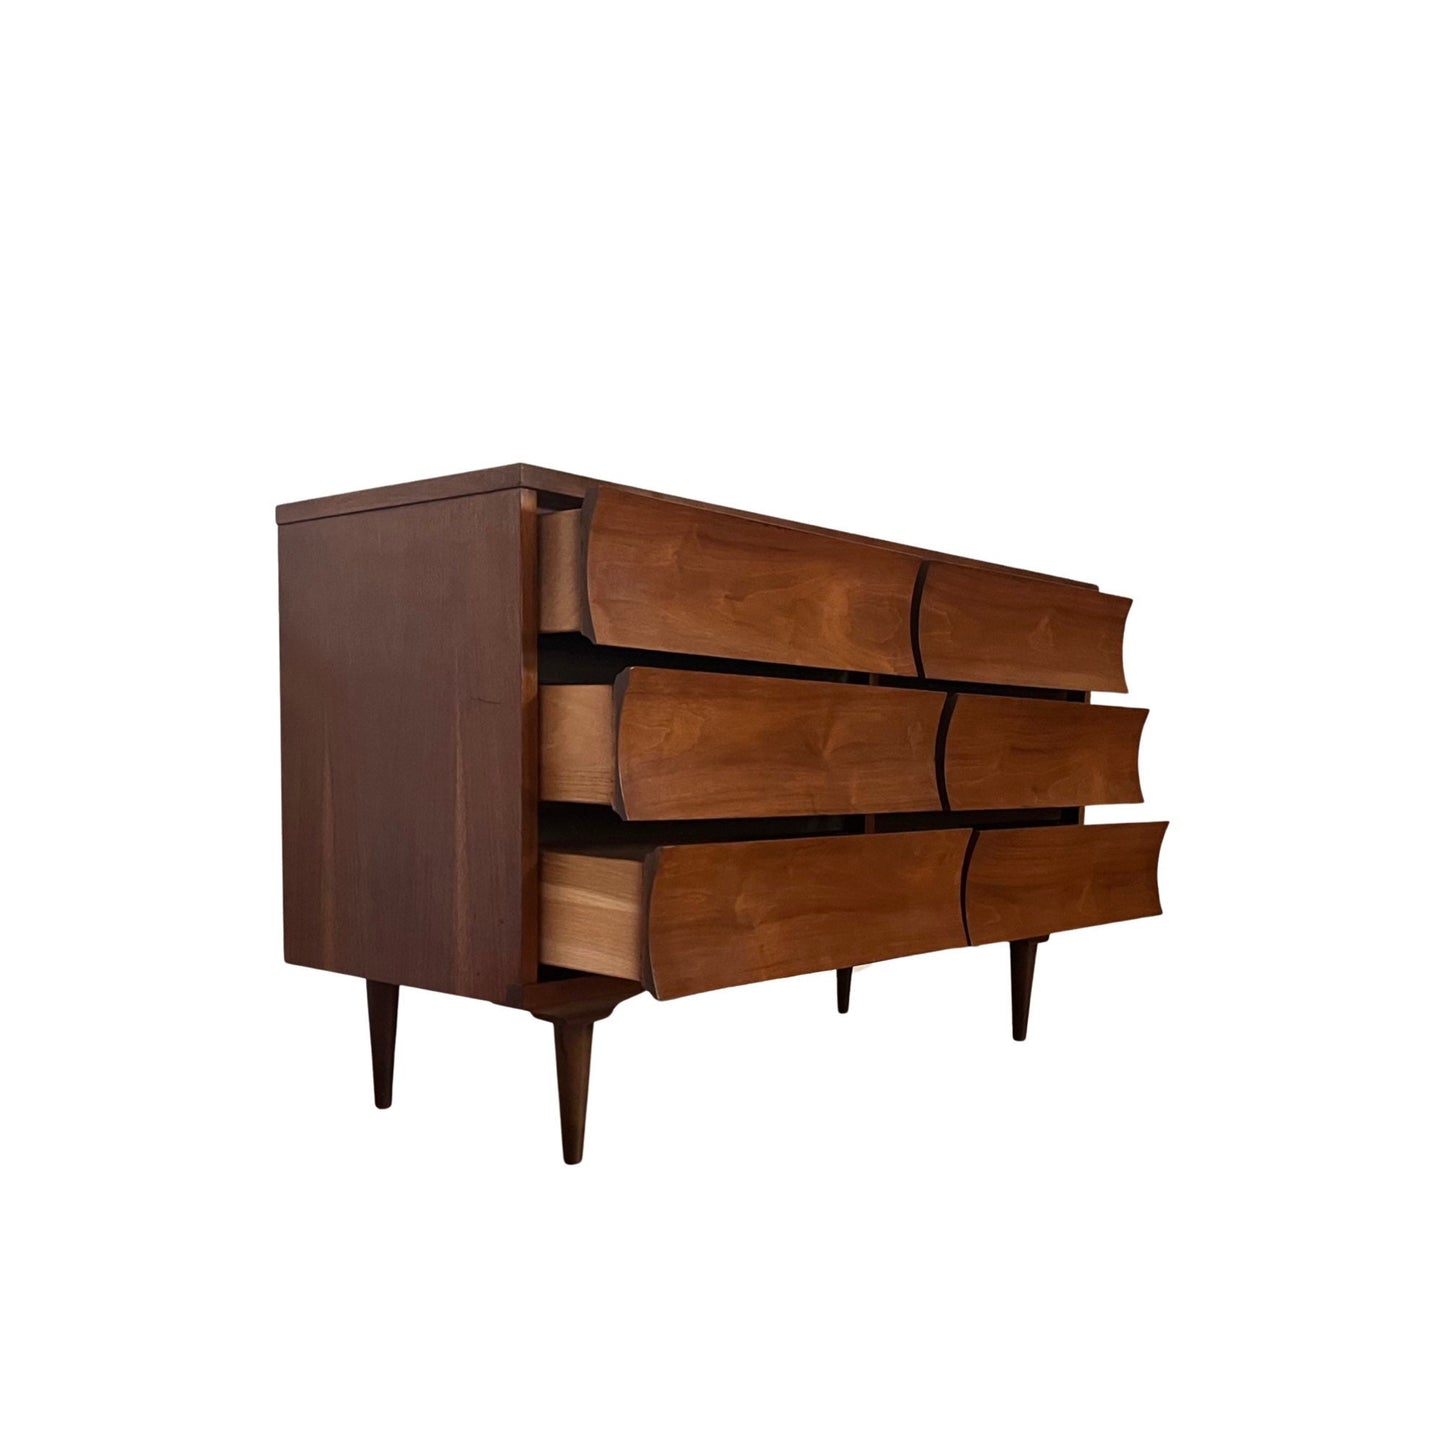 Johnson Carper “Brentwood” Mid Century Modern 6 Drawer Lowboy Dresser c. 1960s